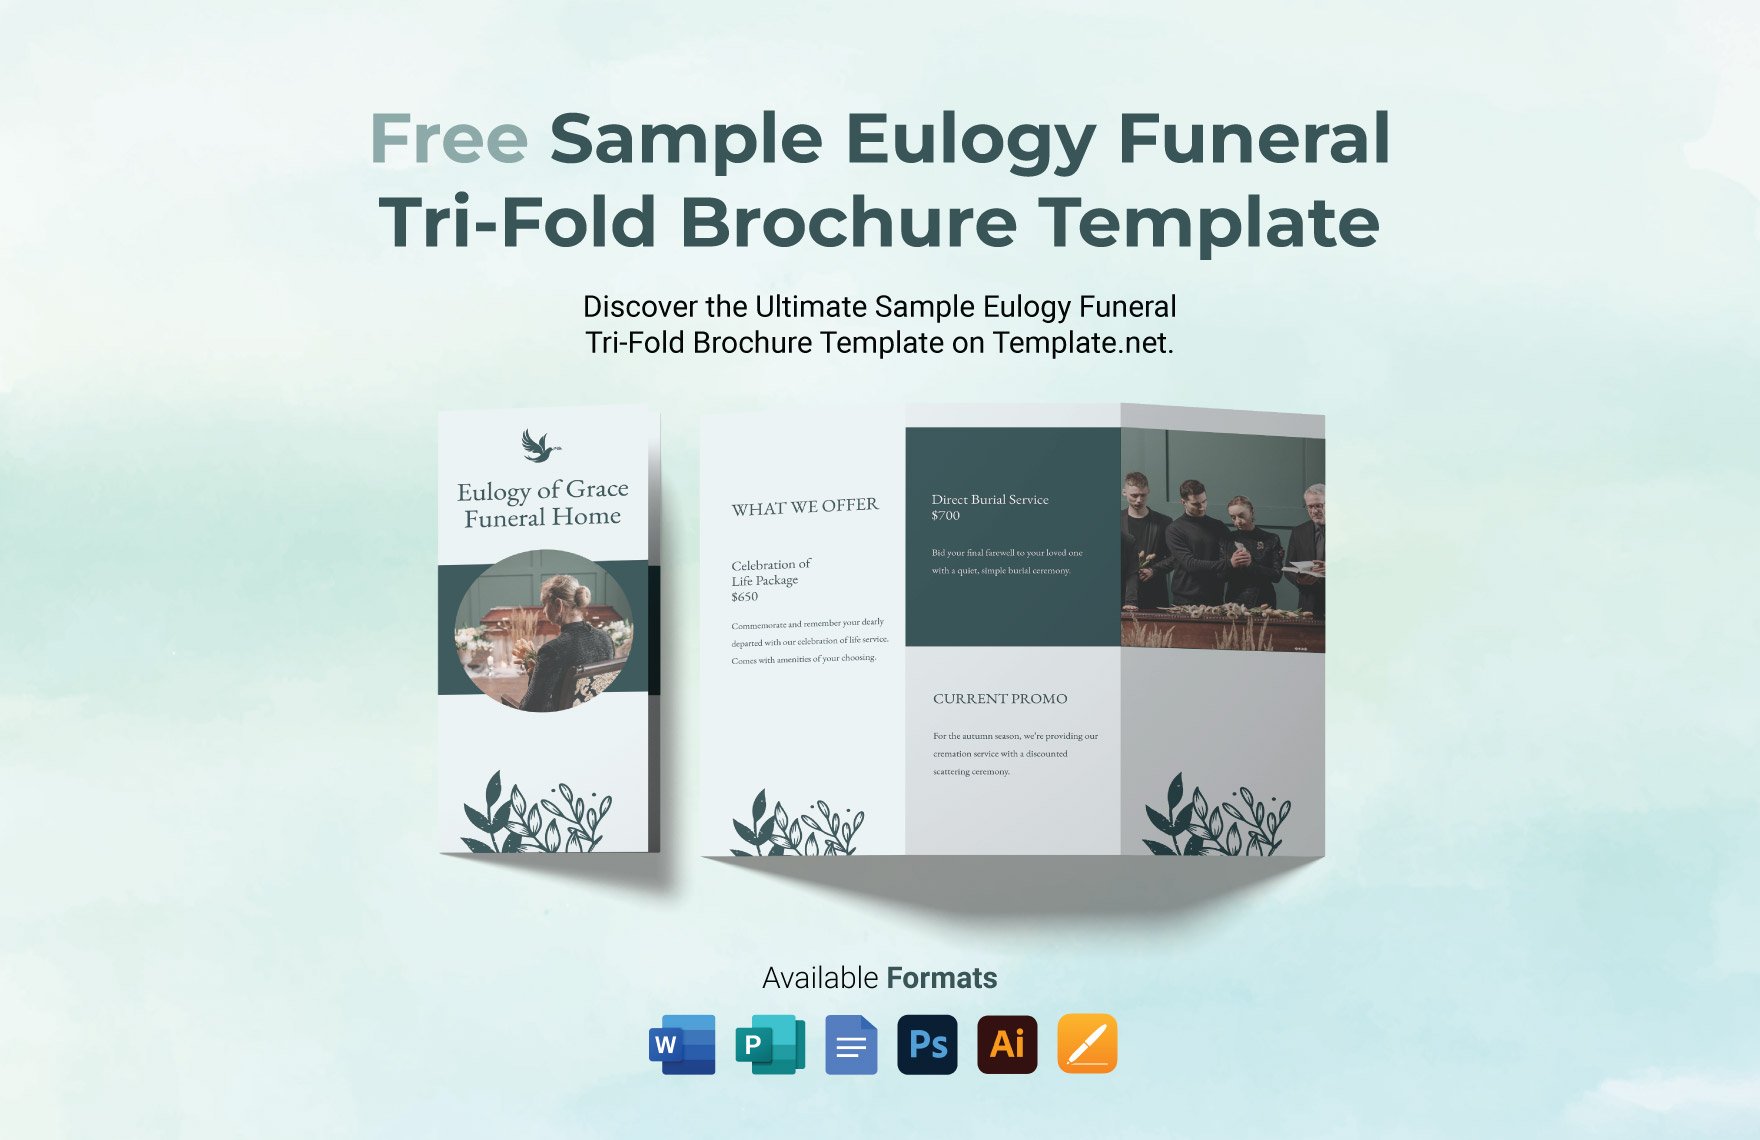 Sample Eulogy Funeral Tri-Fold Brochure Template